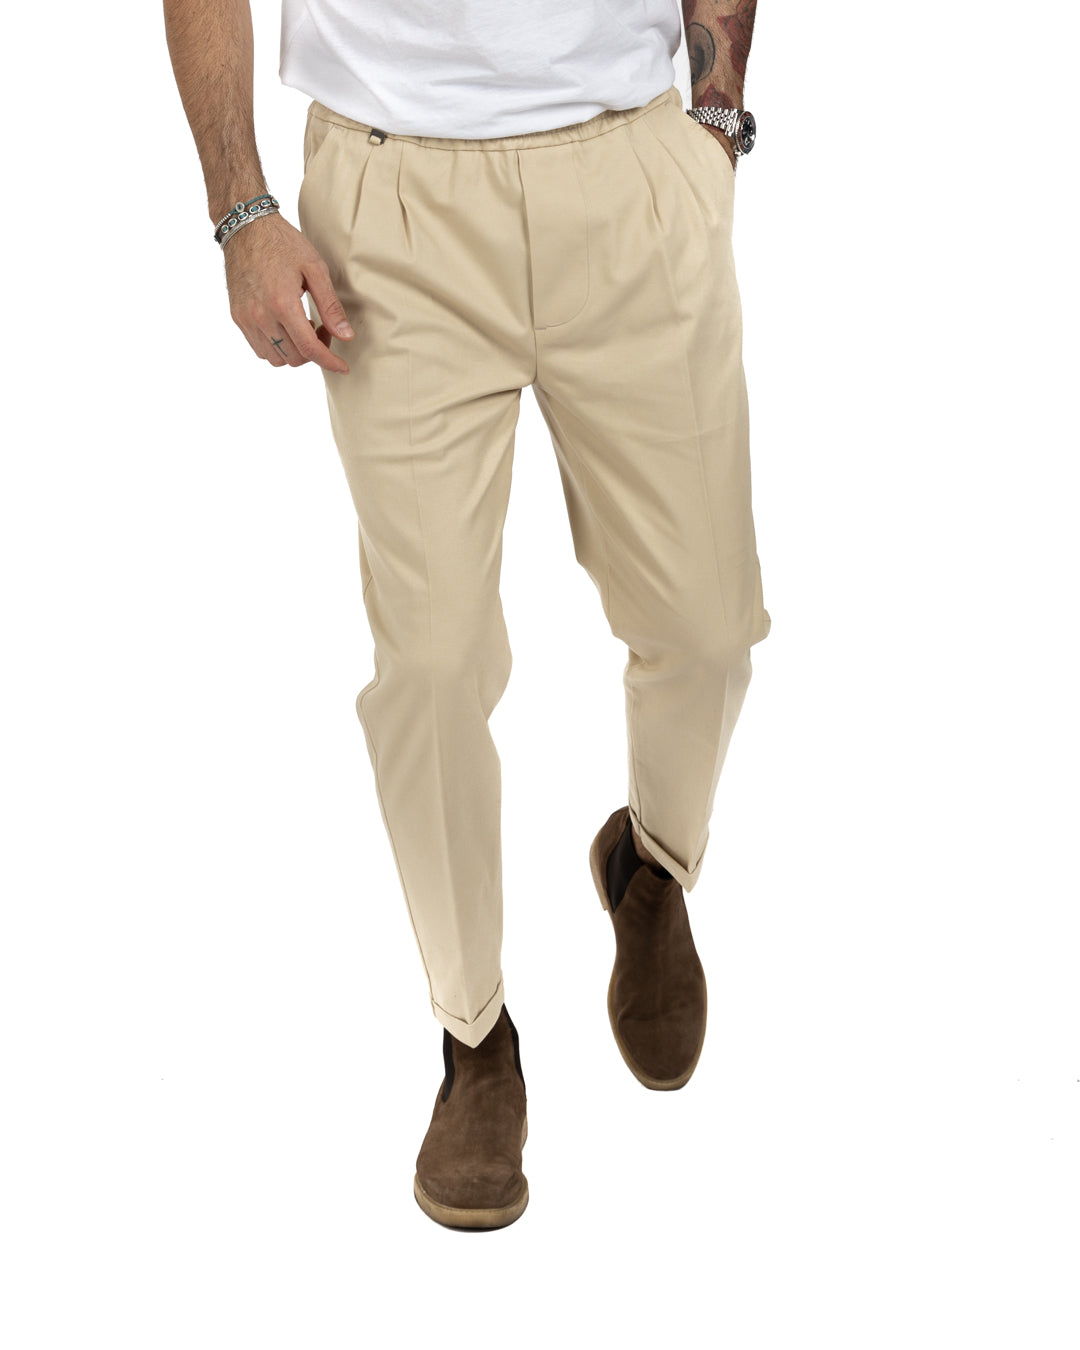 Larry - cream cotton trousers